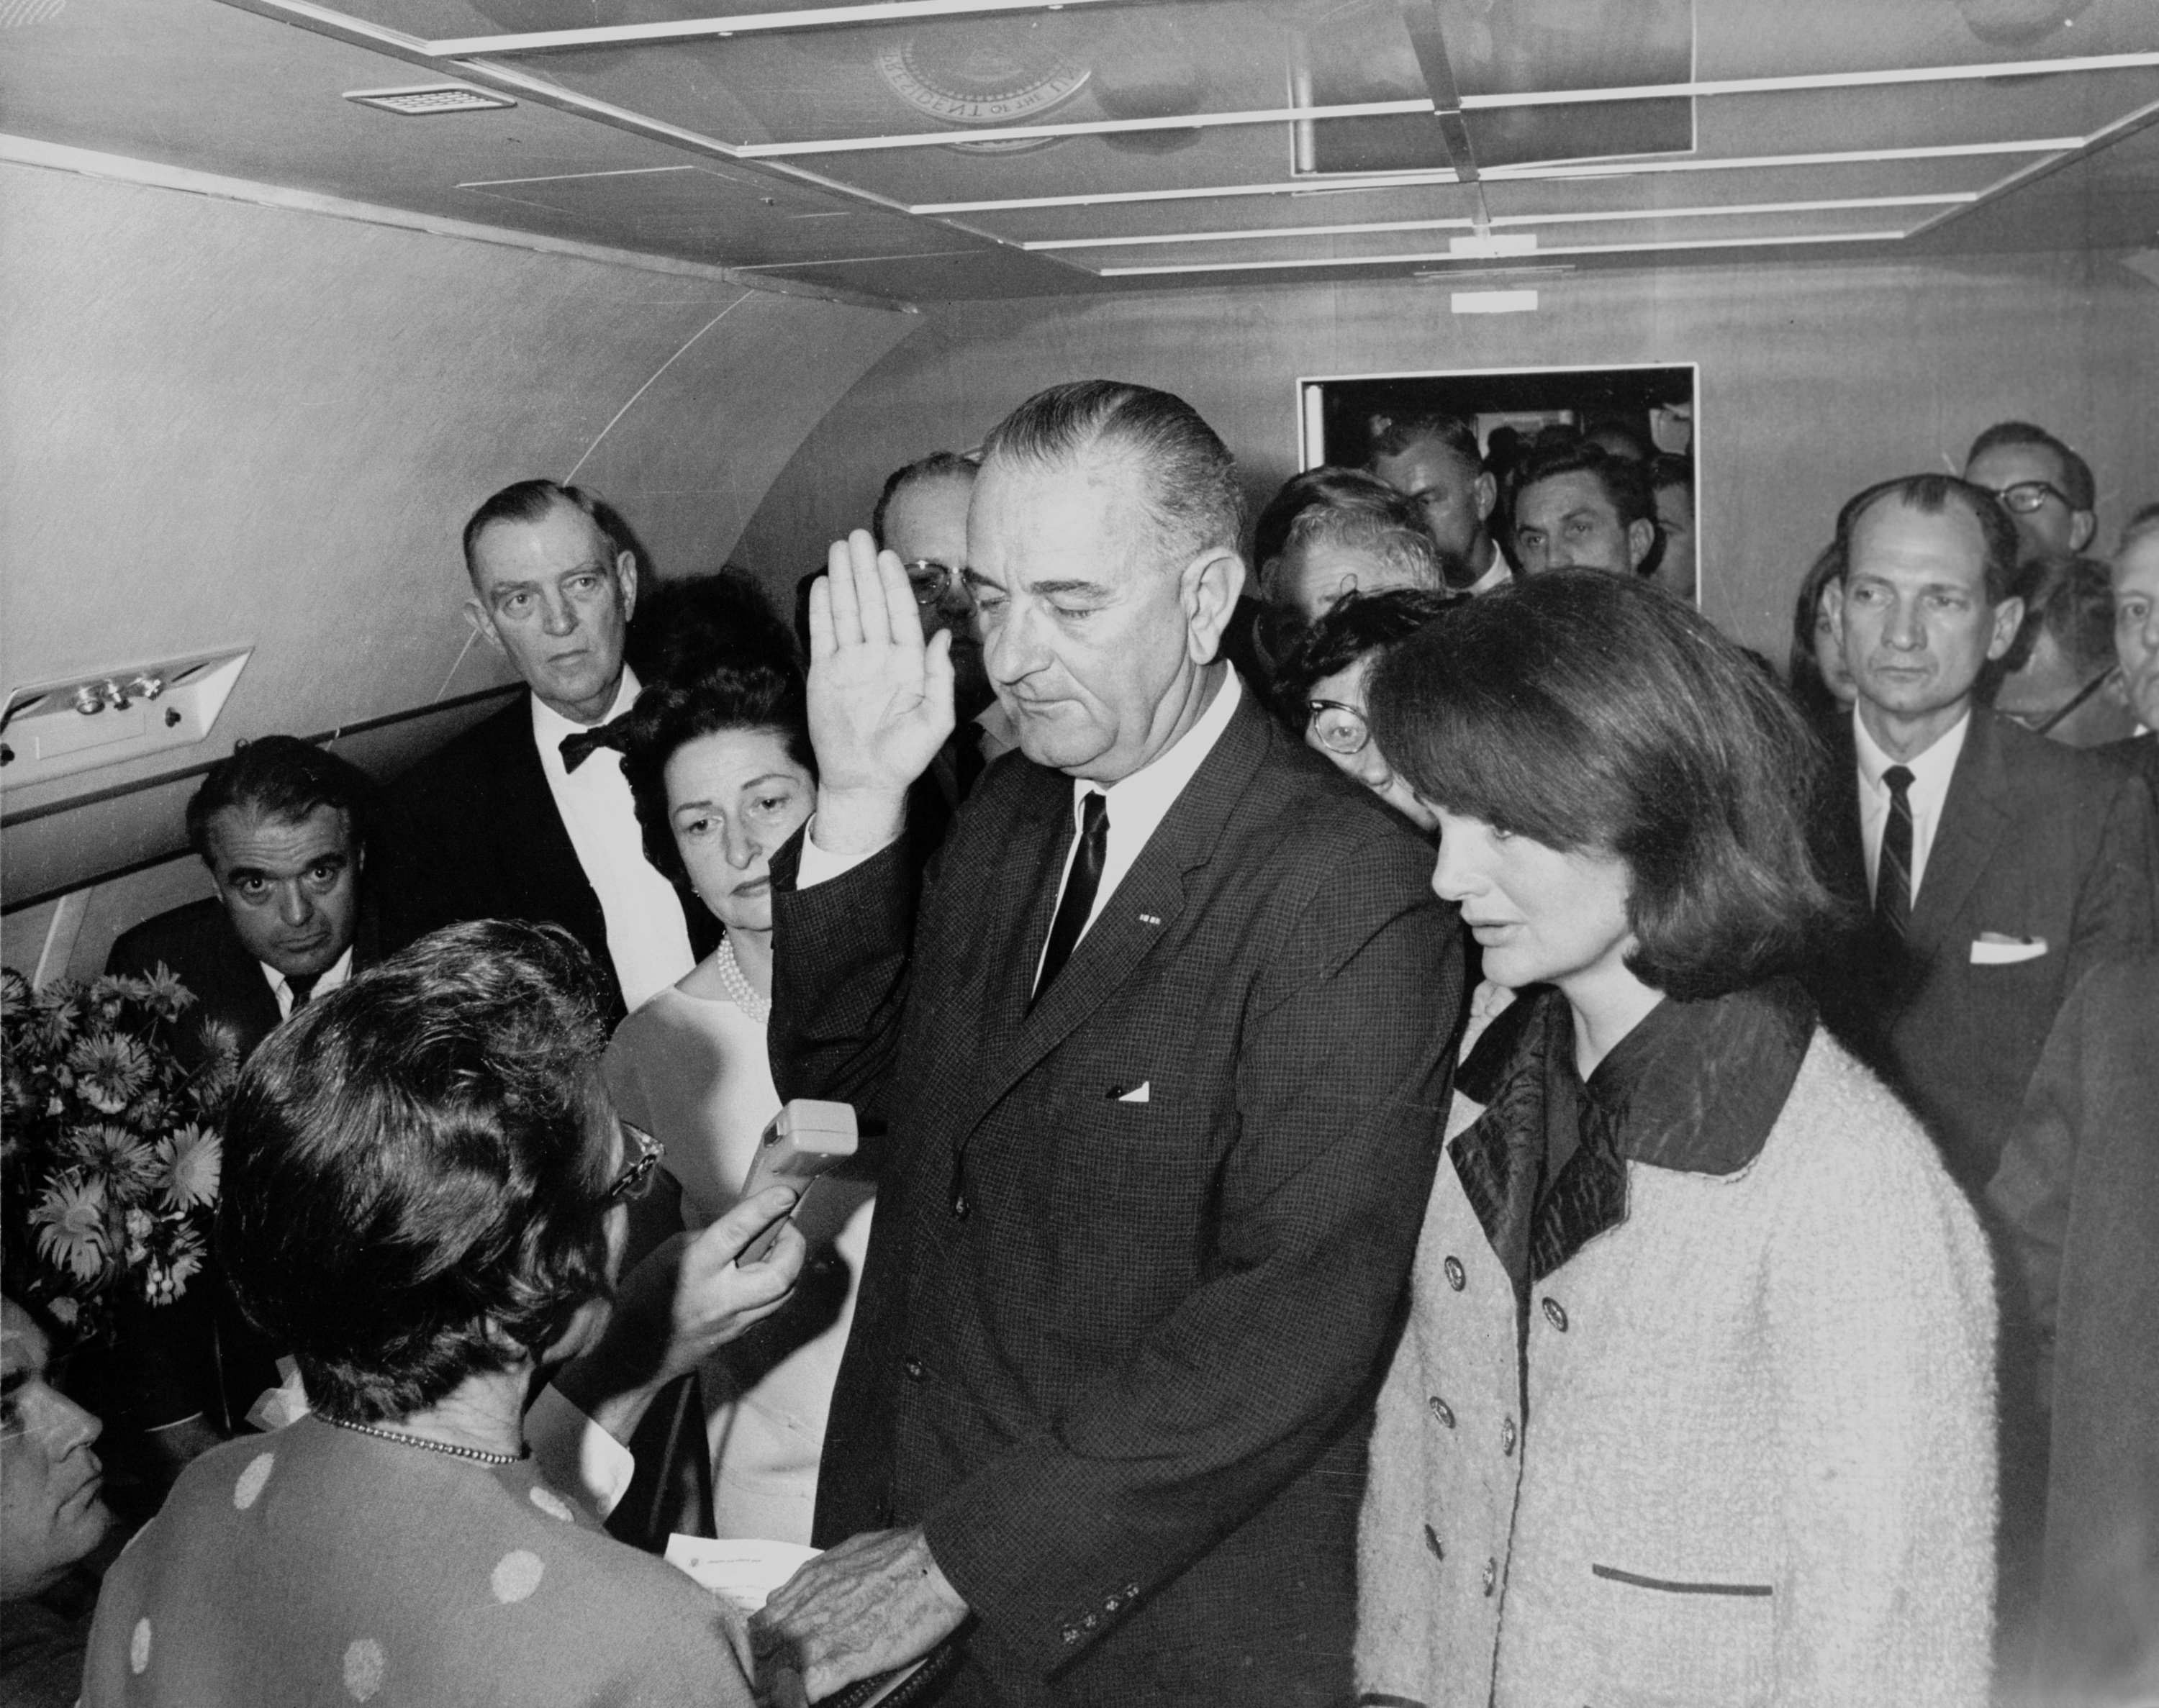 Lyndon B. Johnson taking the oath of office, November